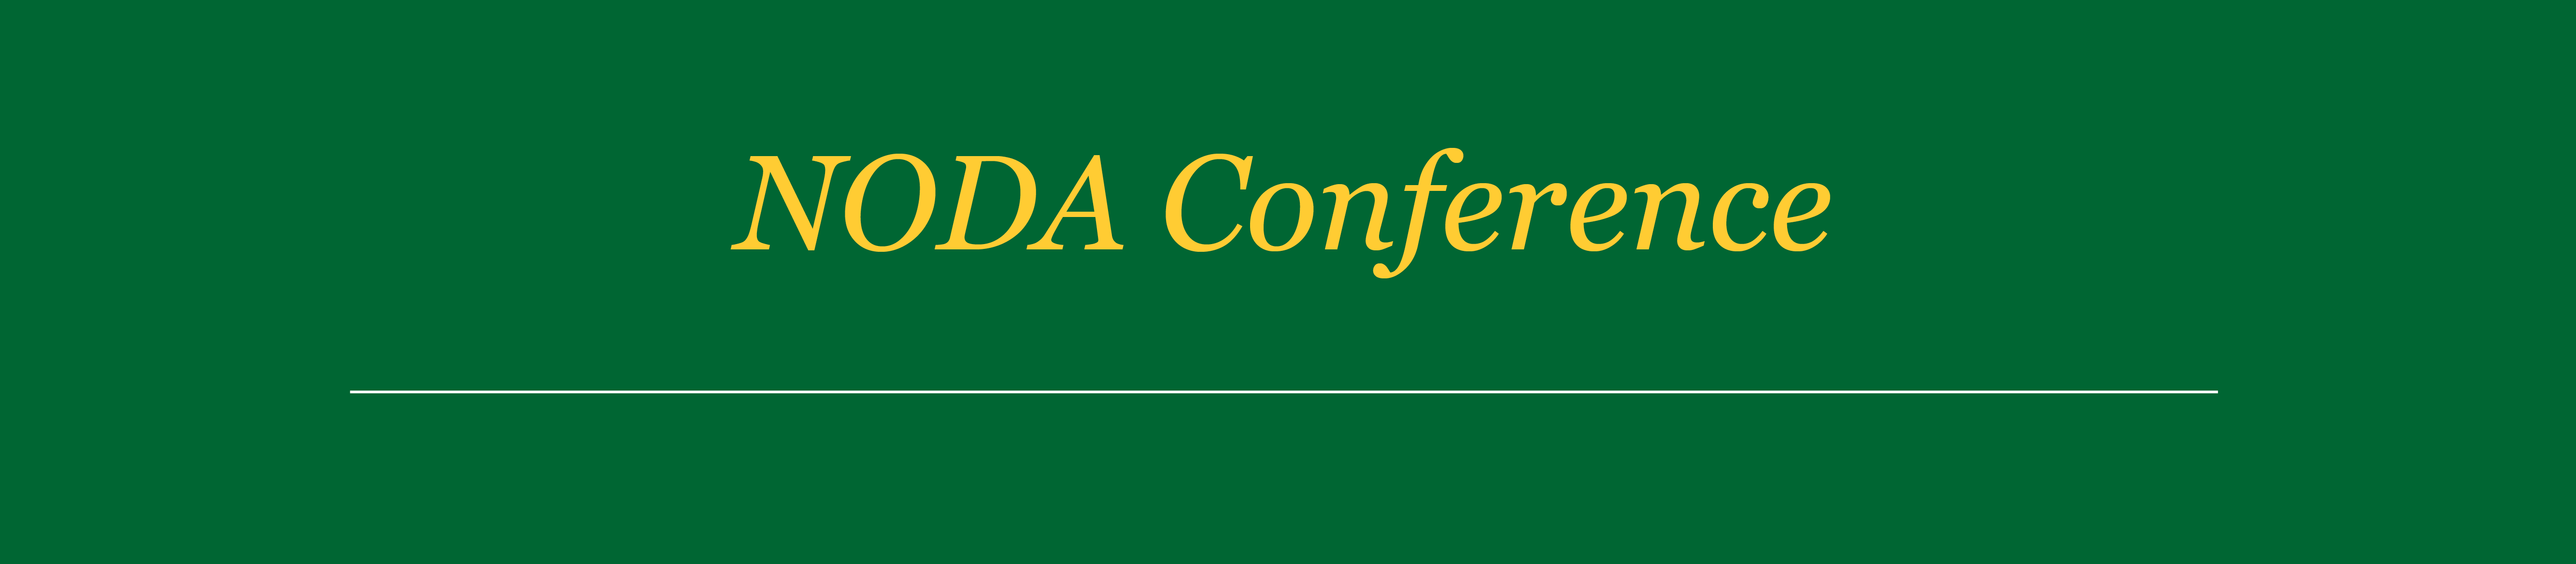 NODA Conference